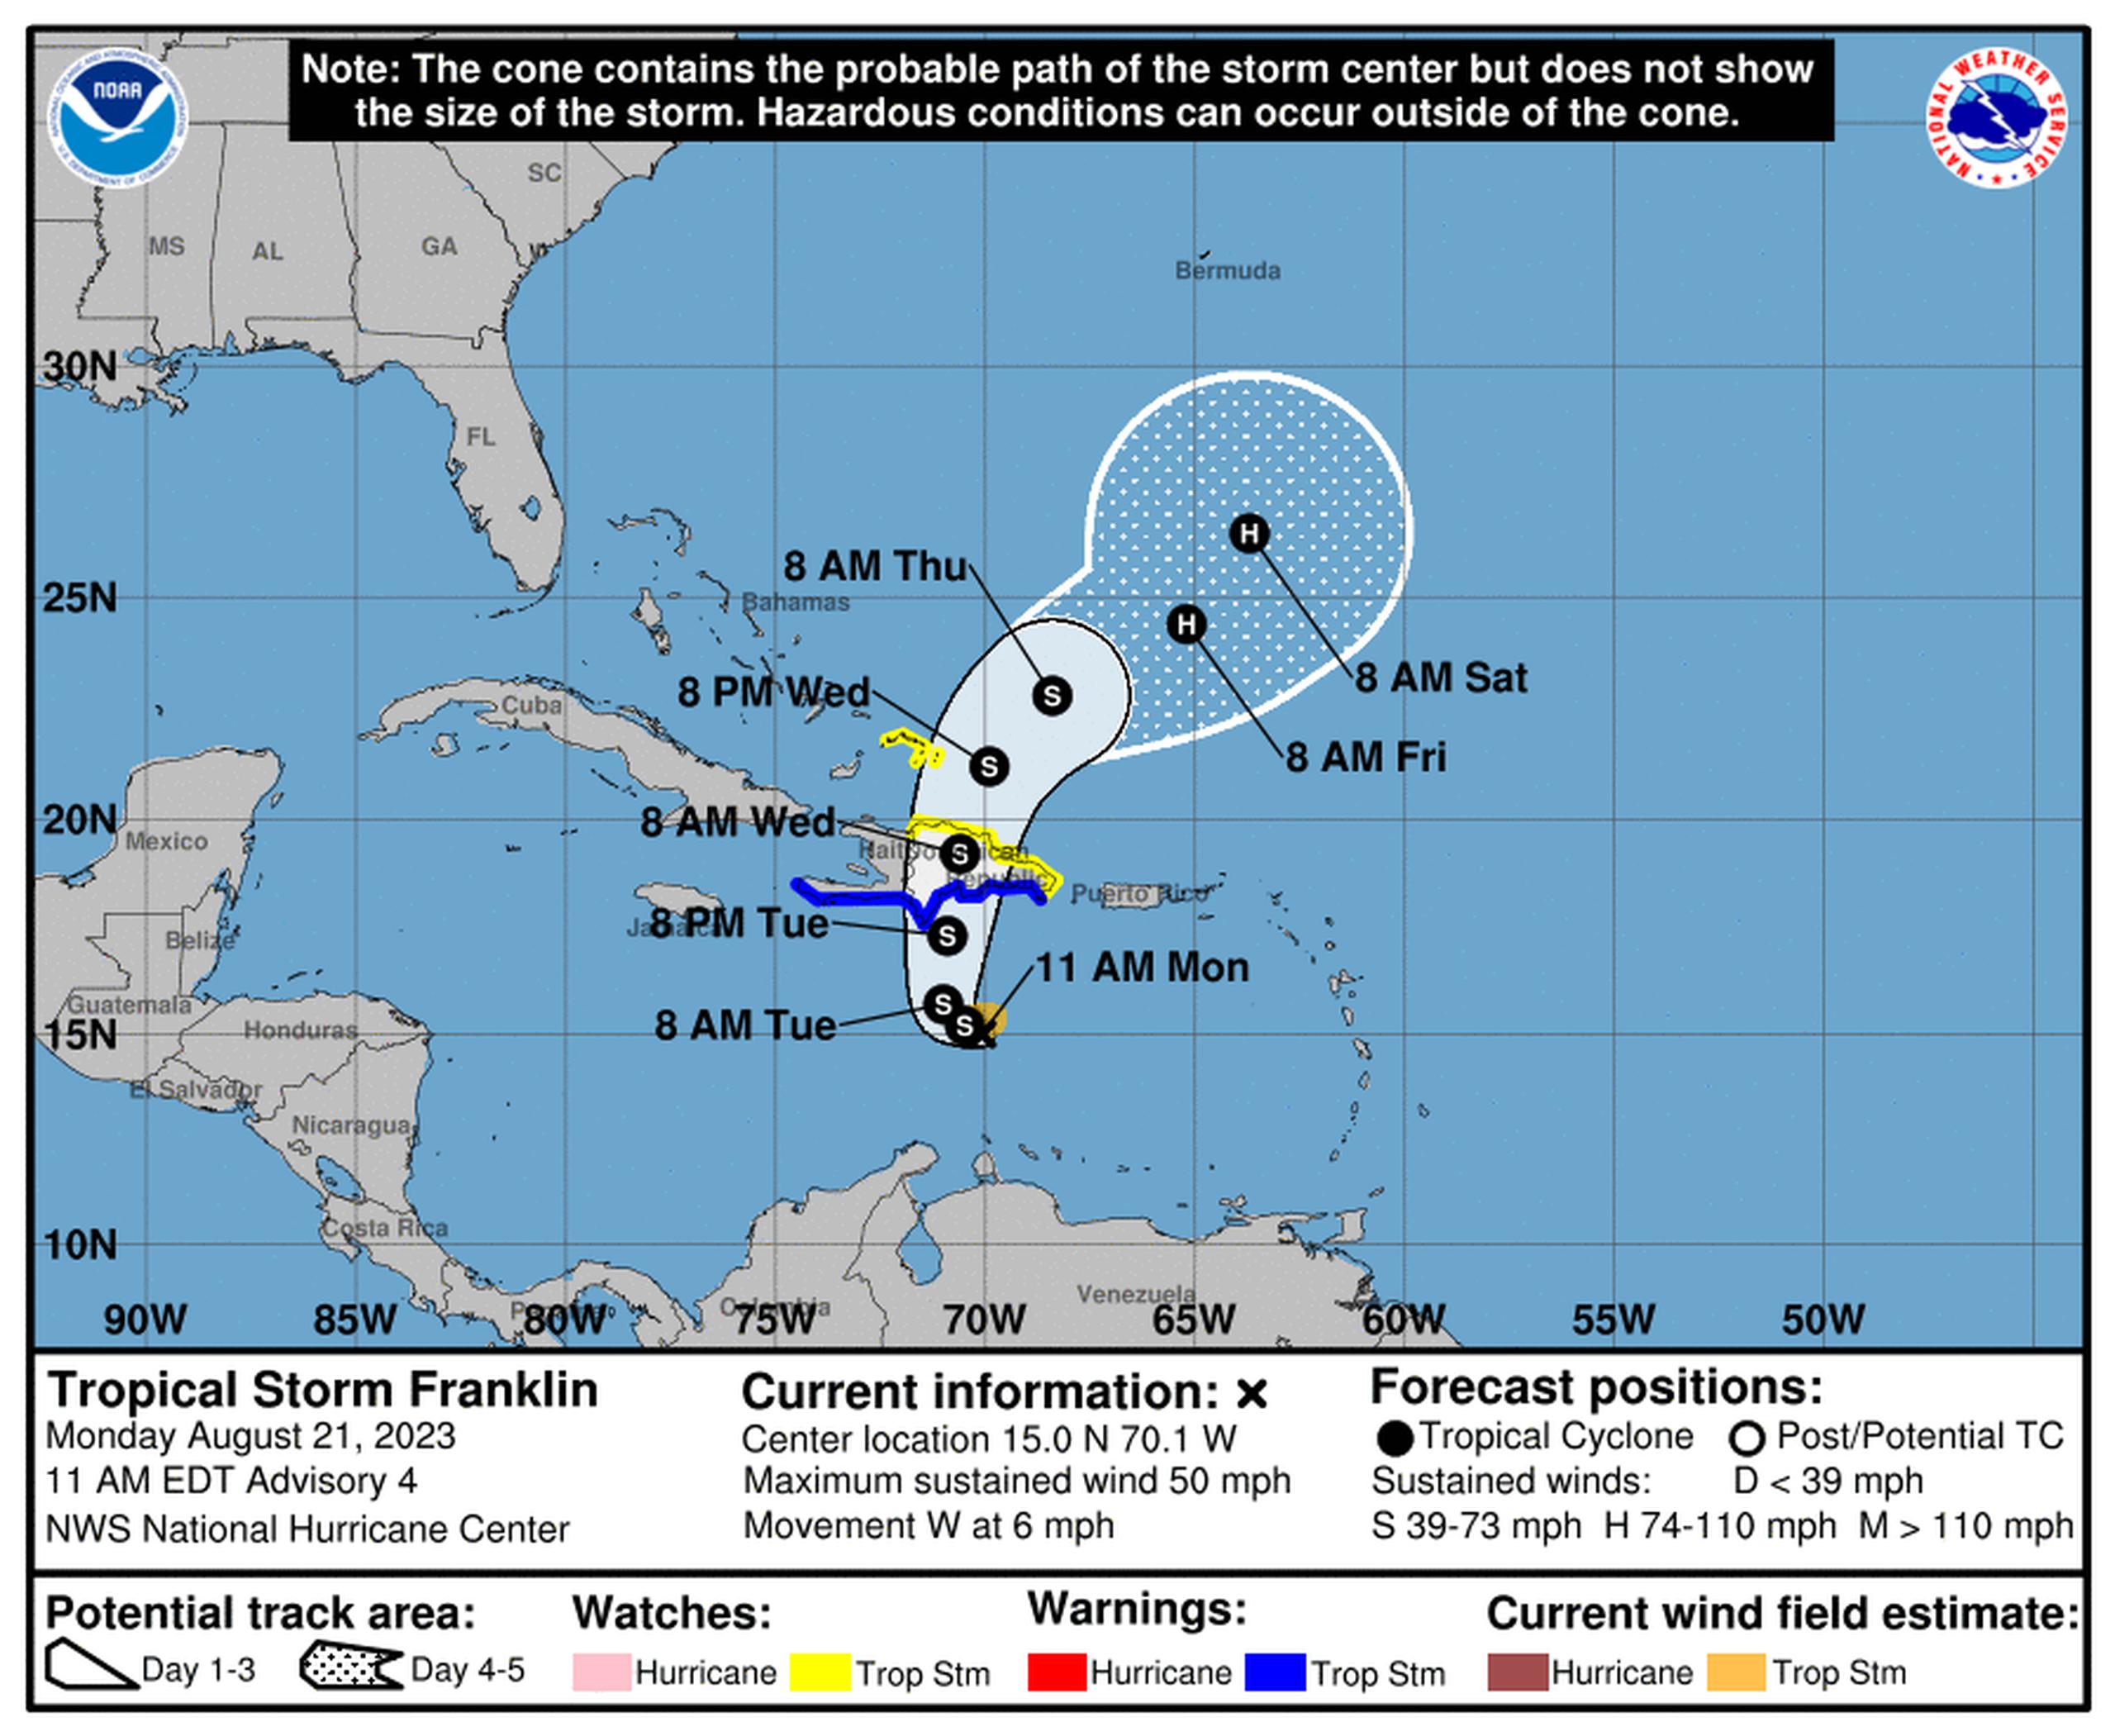 Pronóstico de la tormenta tropical Franklin emitido a las 11:00 de la mañana del 21 de agosto de 2023.